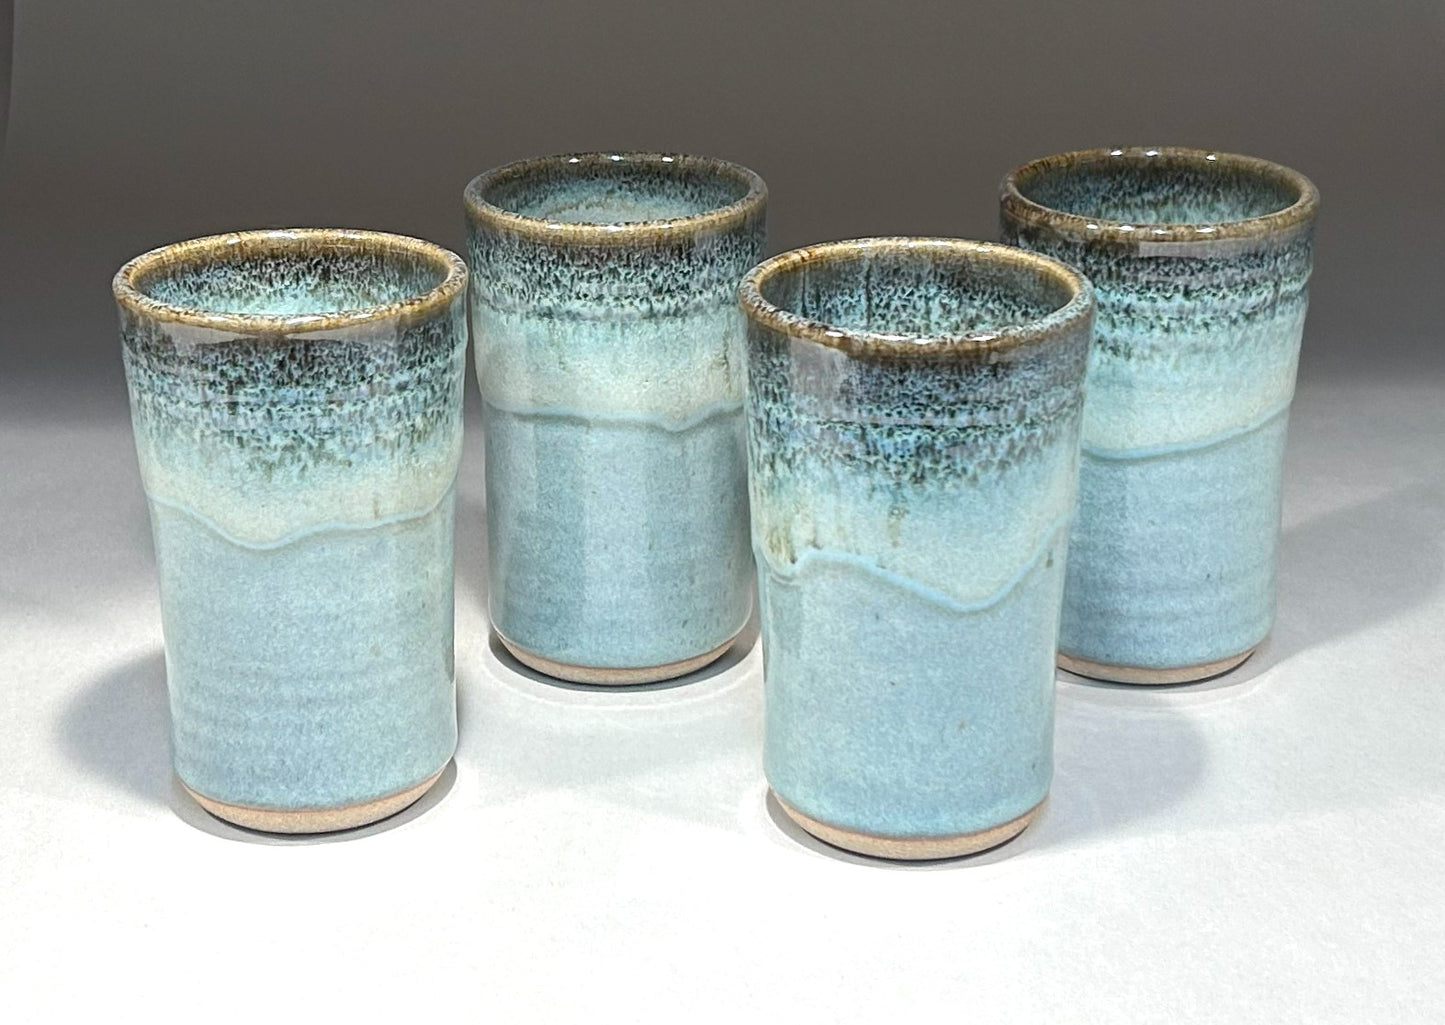 Handmade Pottery Tumbler - Blue Green Ash glaze